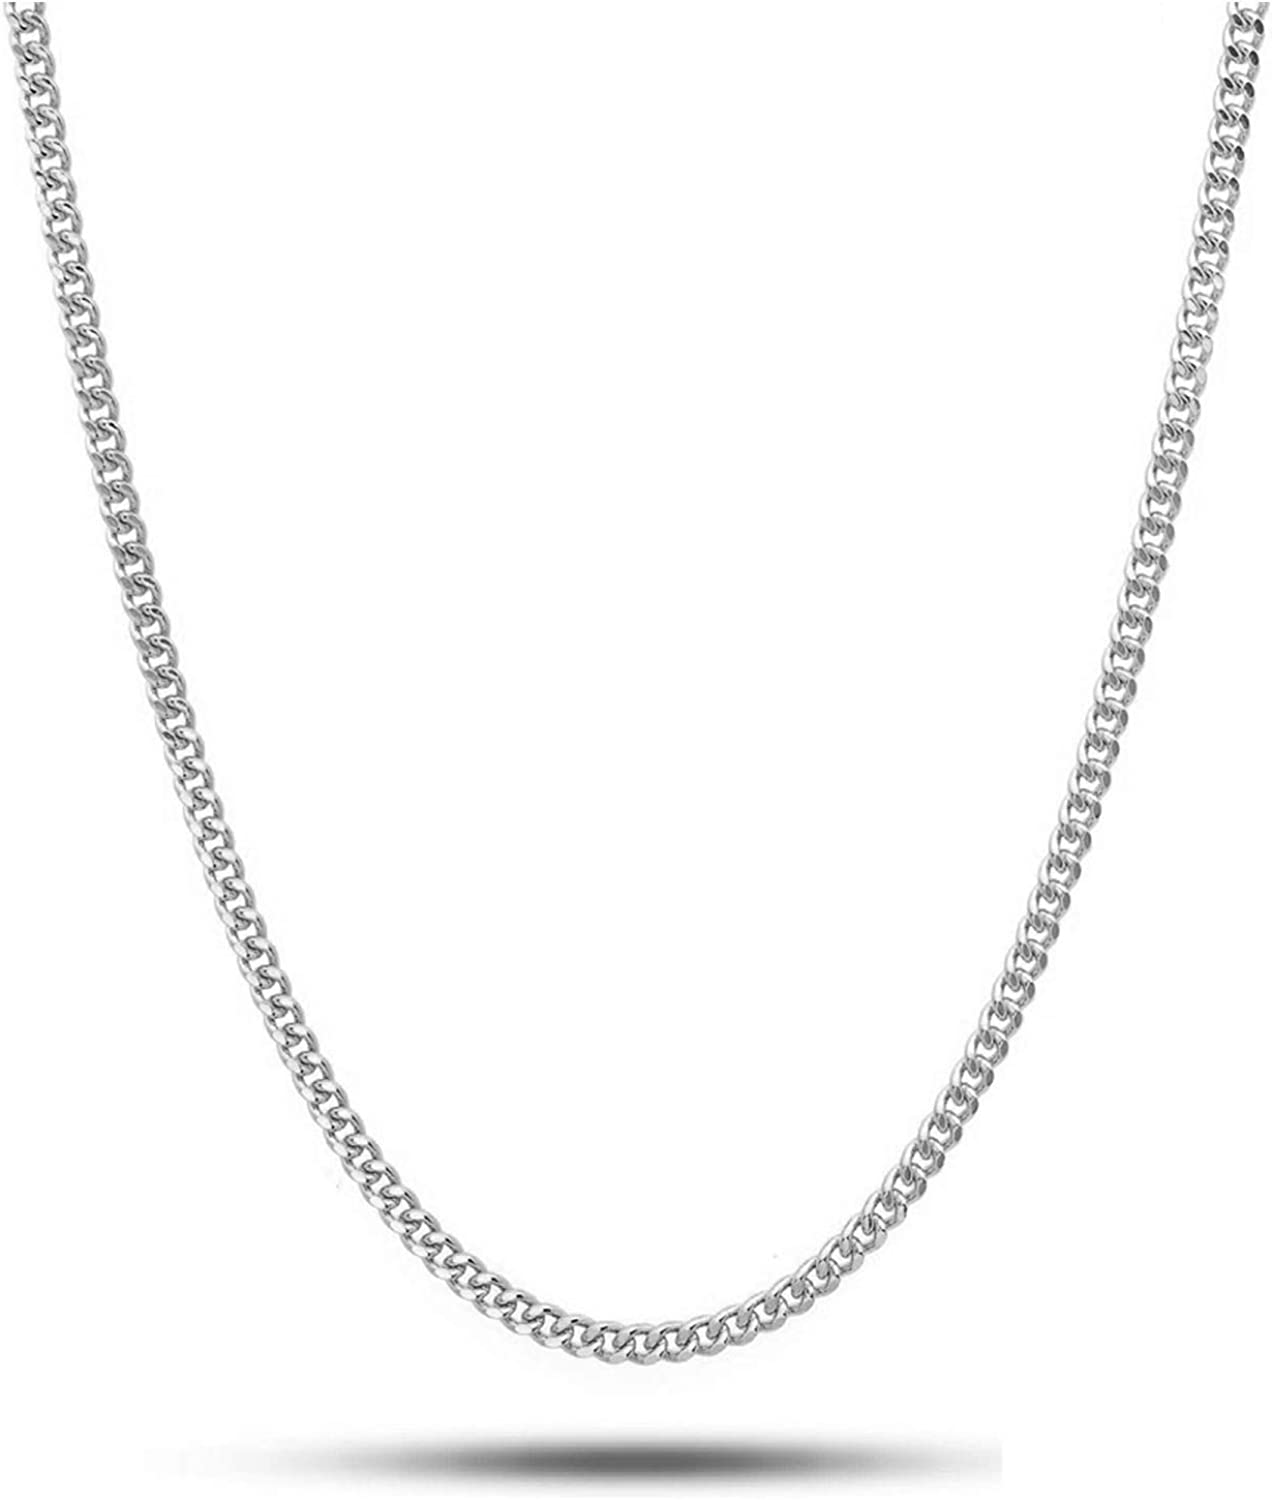 Pori Jewelers Genuine Platinum 950 Solid Diamond Cut Cuban/Curb Chain Necklace -1.0mm Thick